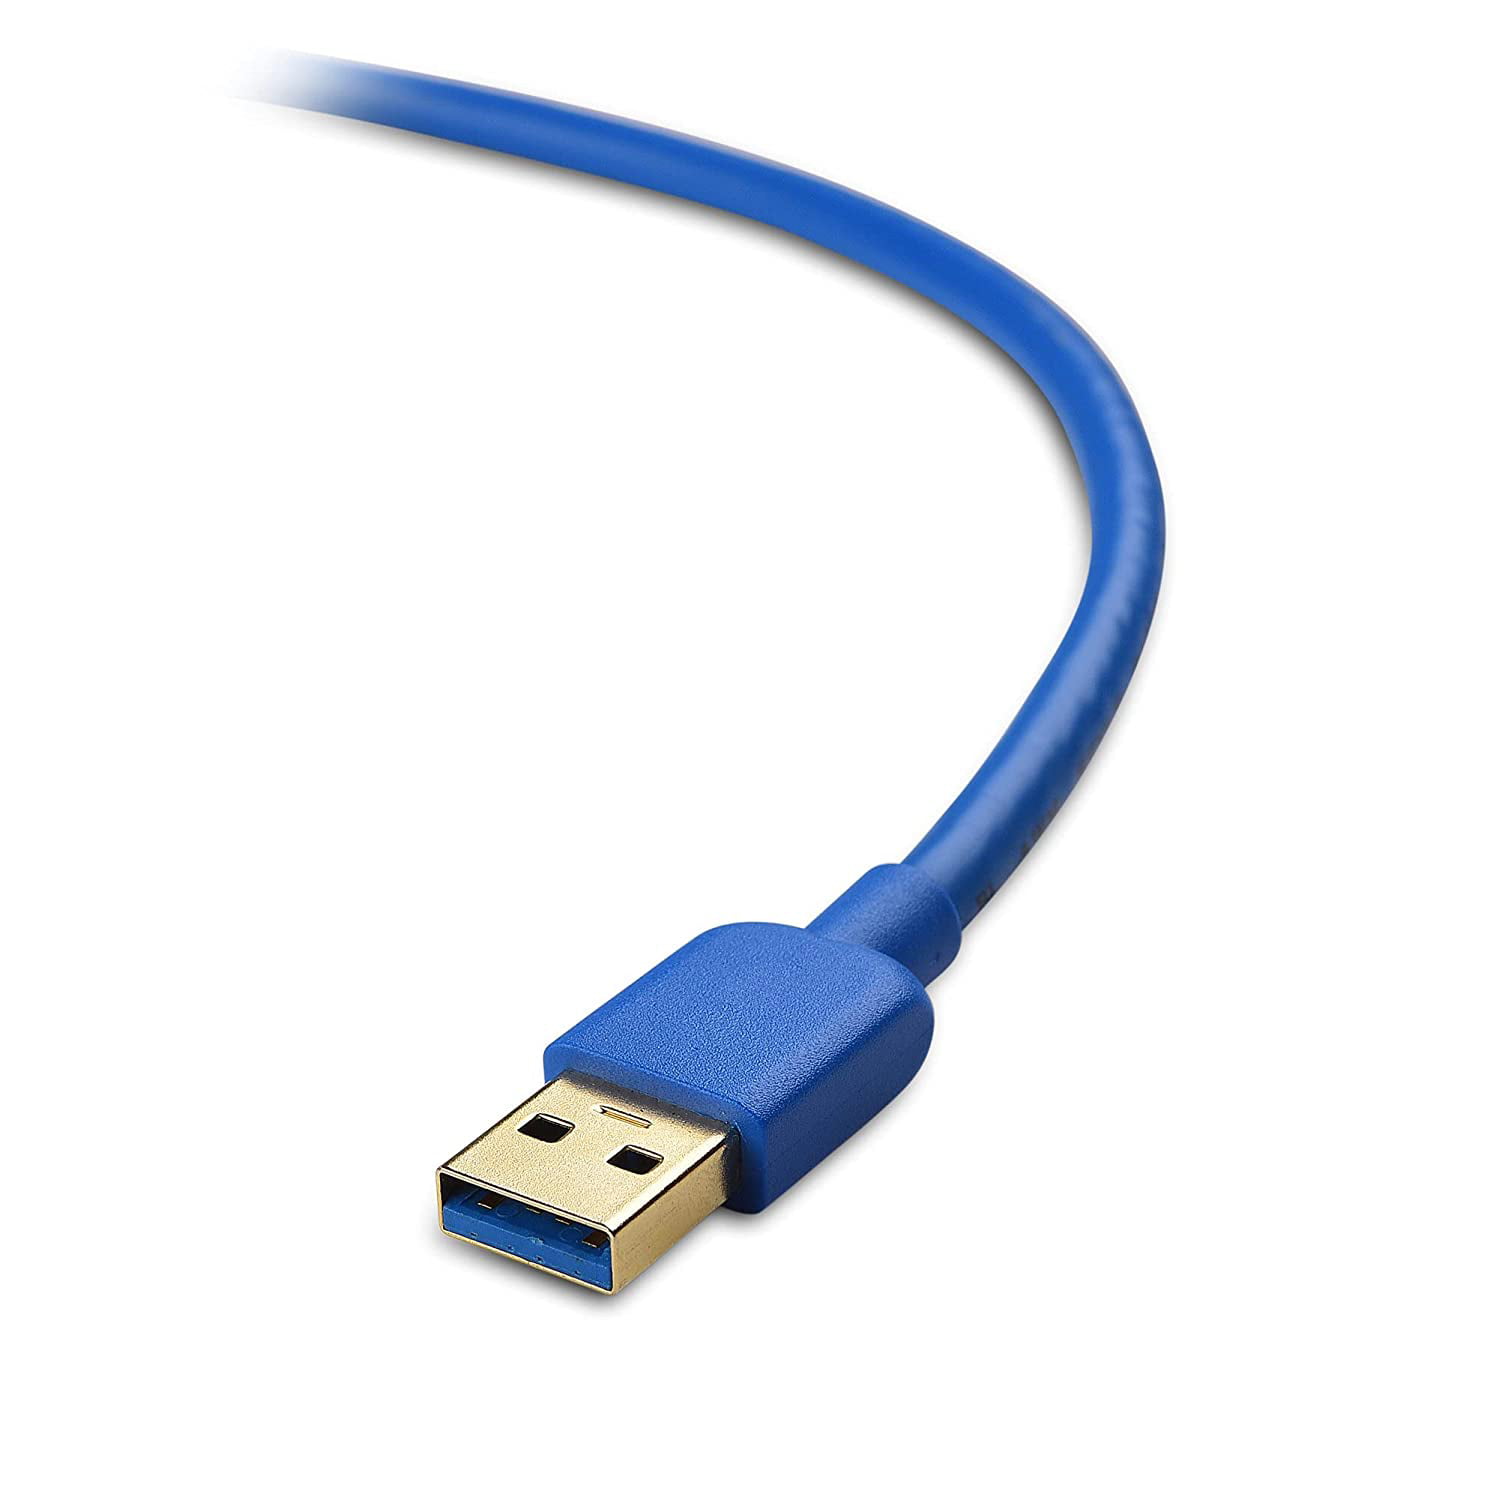 Cable Matters Micro USB 3.0 Cable (Micro USB Cable A to Micro B) in Blue 3 Feet - Available 3 Feet - 15 Feet in Length - Walmart.com